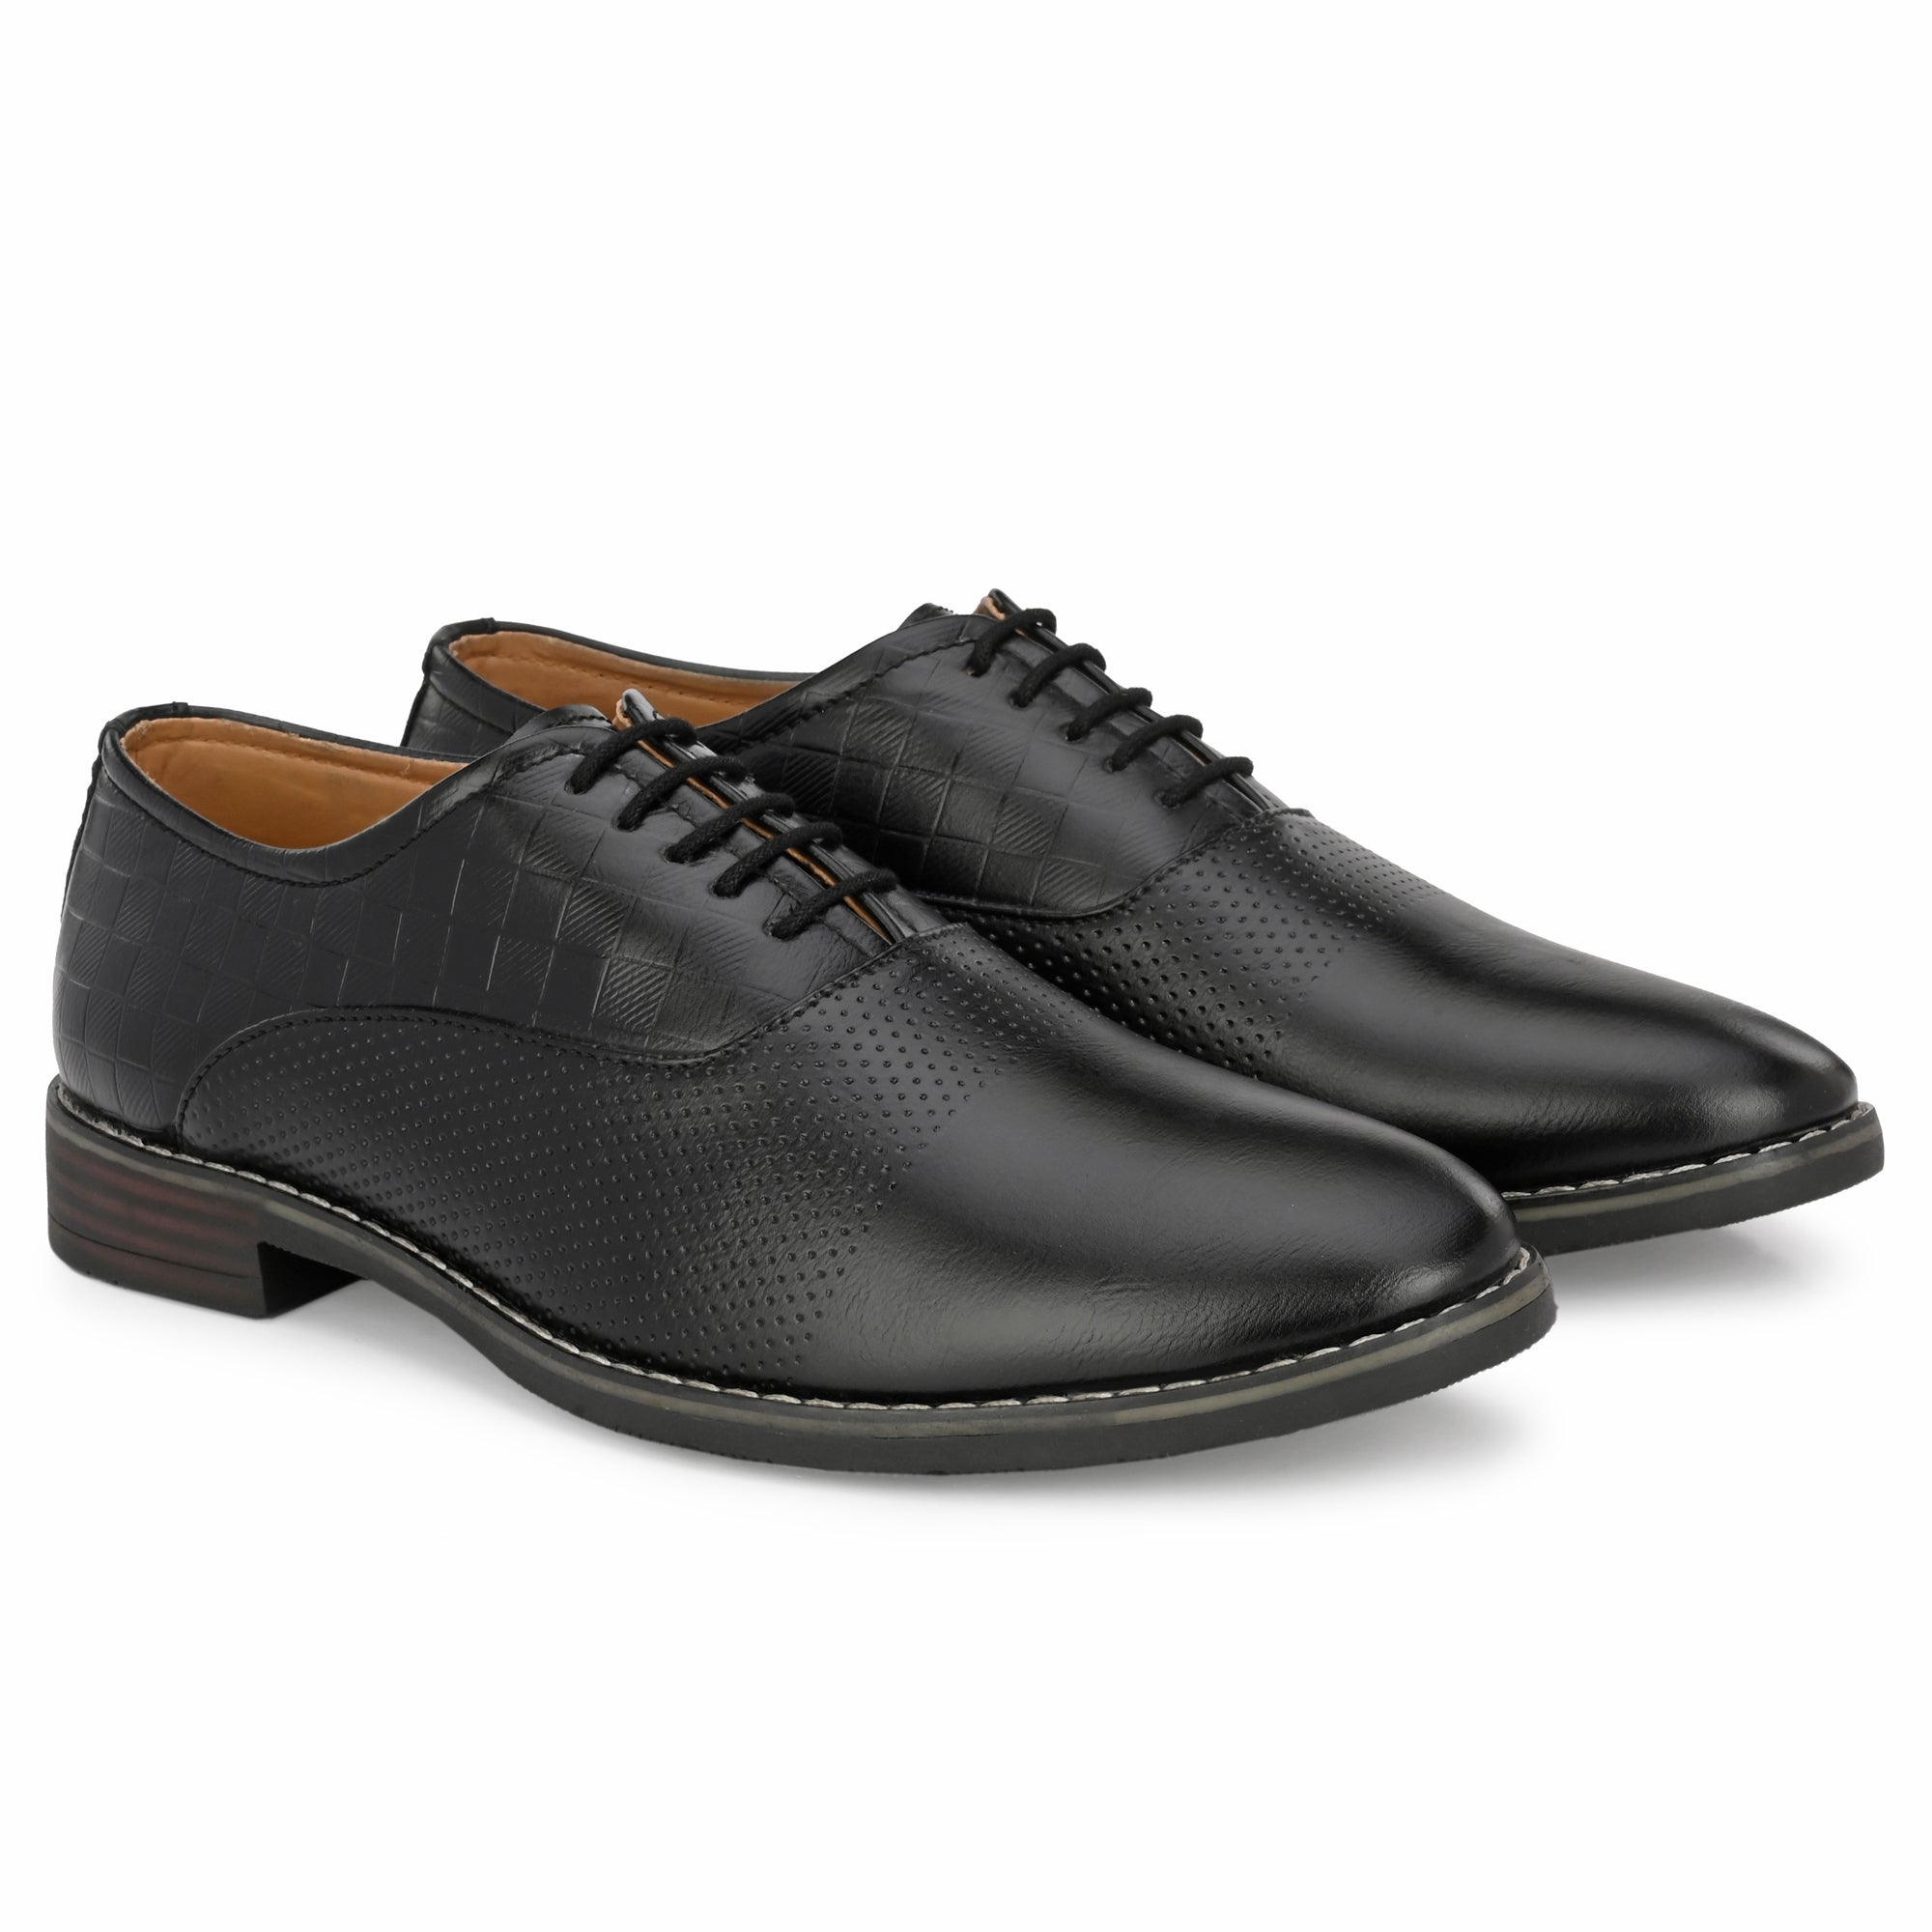 black-formal-lace-up-attitudist-shoes-for-men-with-design-sp11a